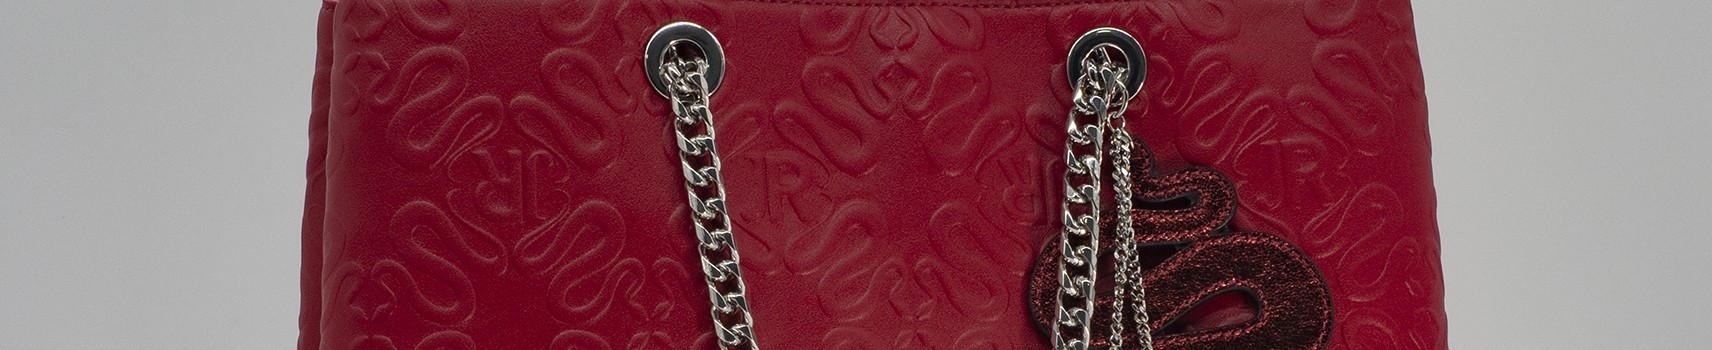 New Women's Handbags | Online Richmond Collection on AGEMINA.COM